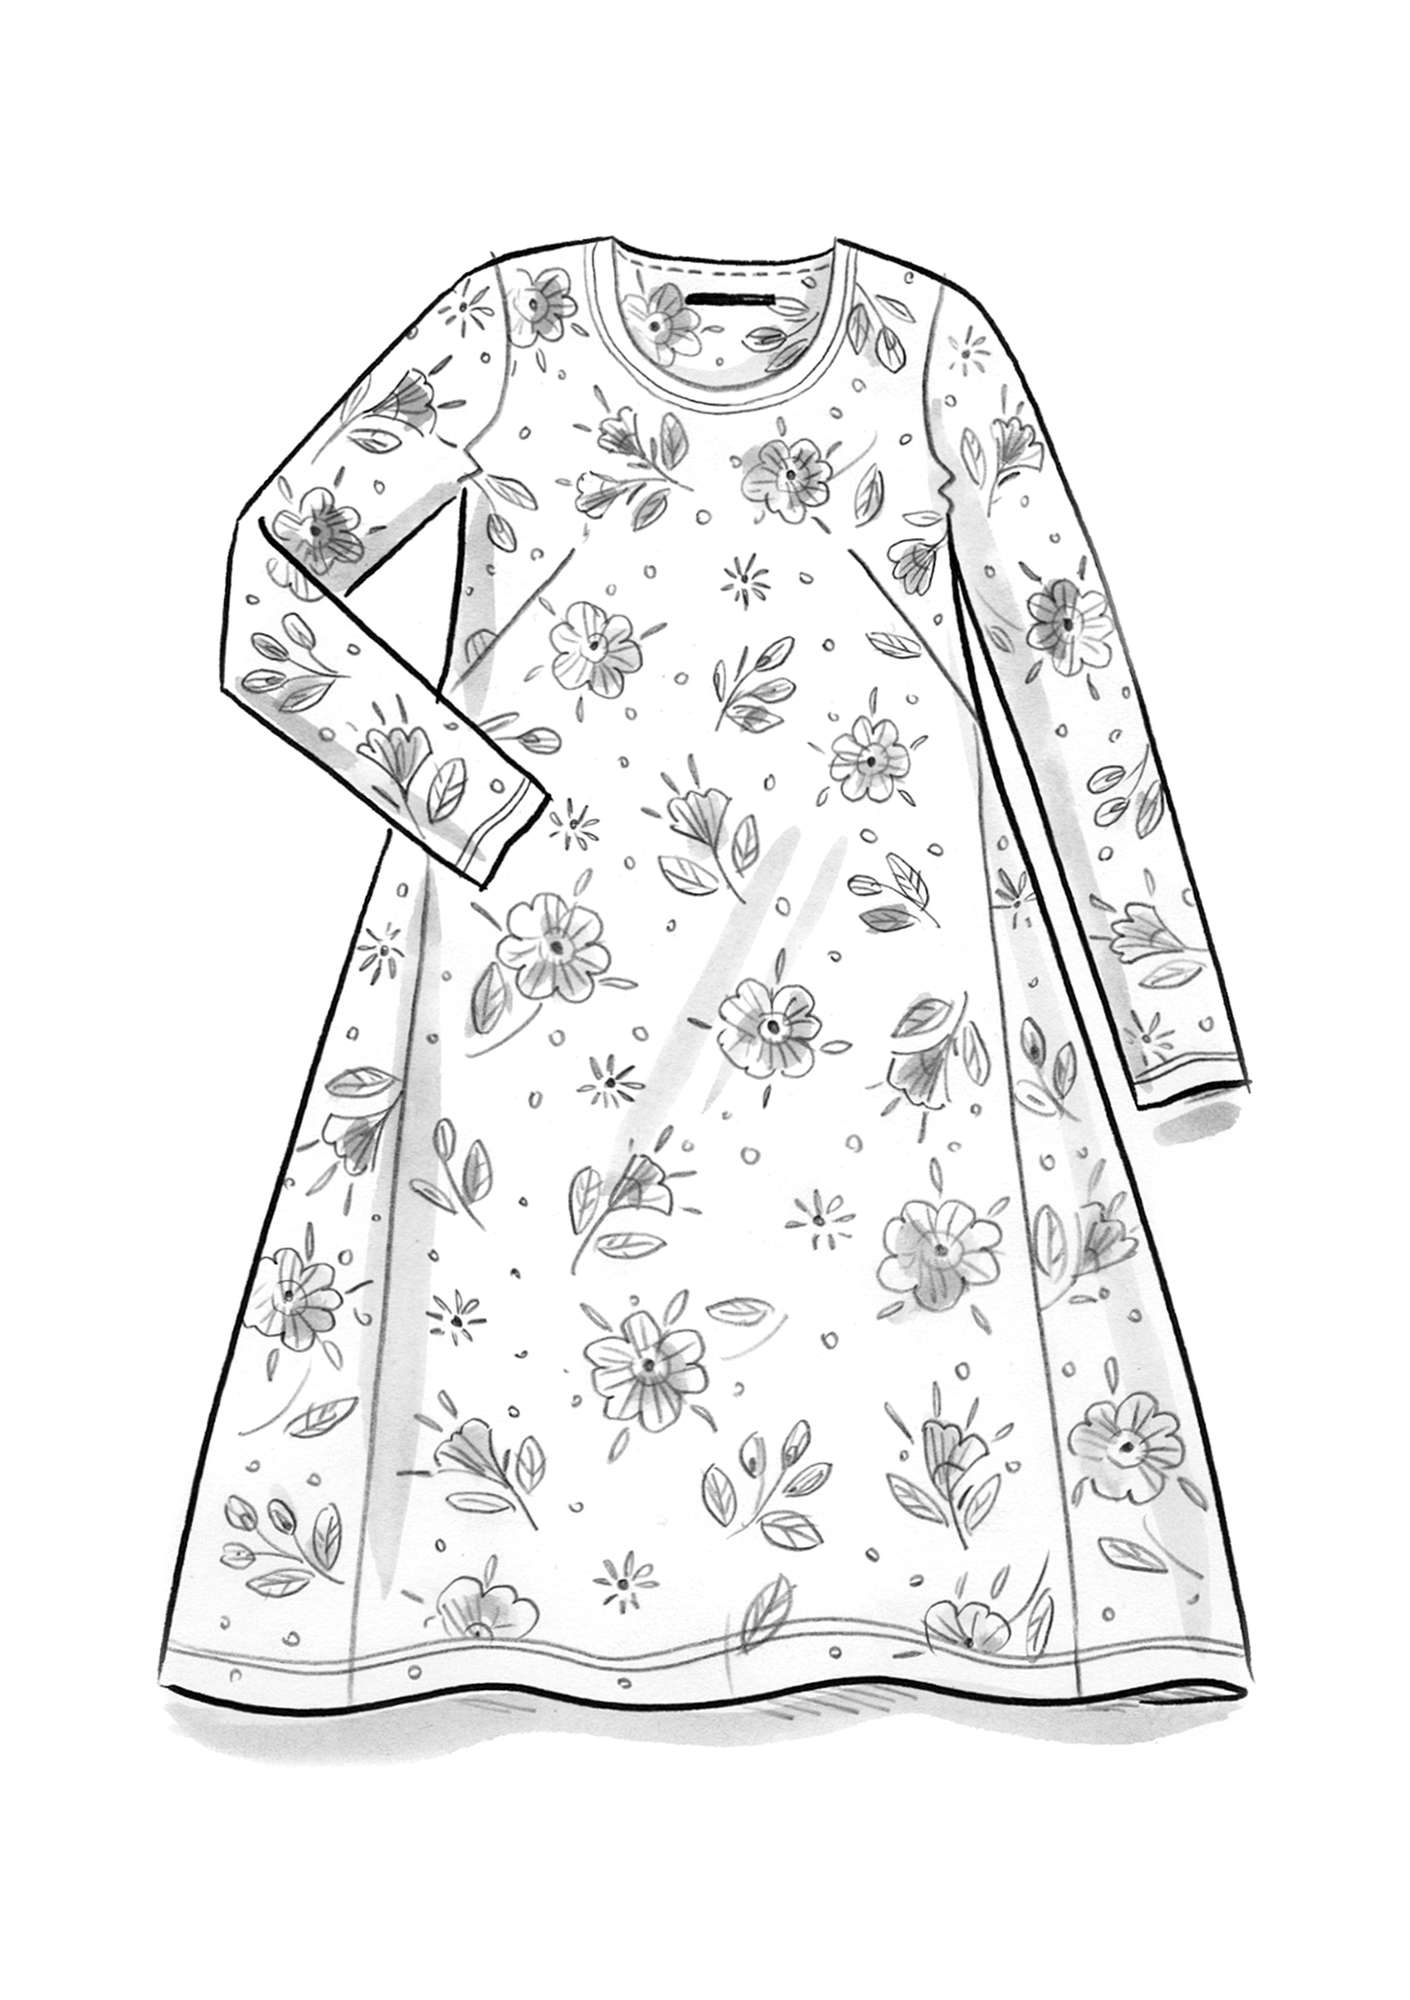 Tricot jurk  Ingrid  van lyocell/elastaan zwart